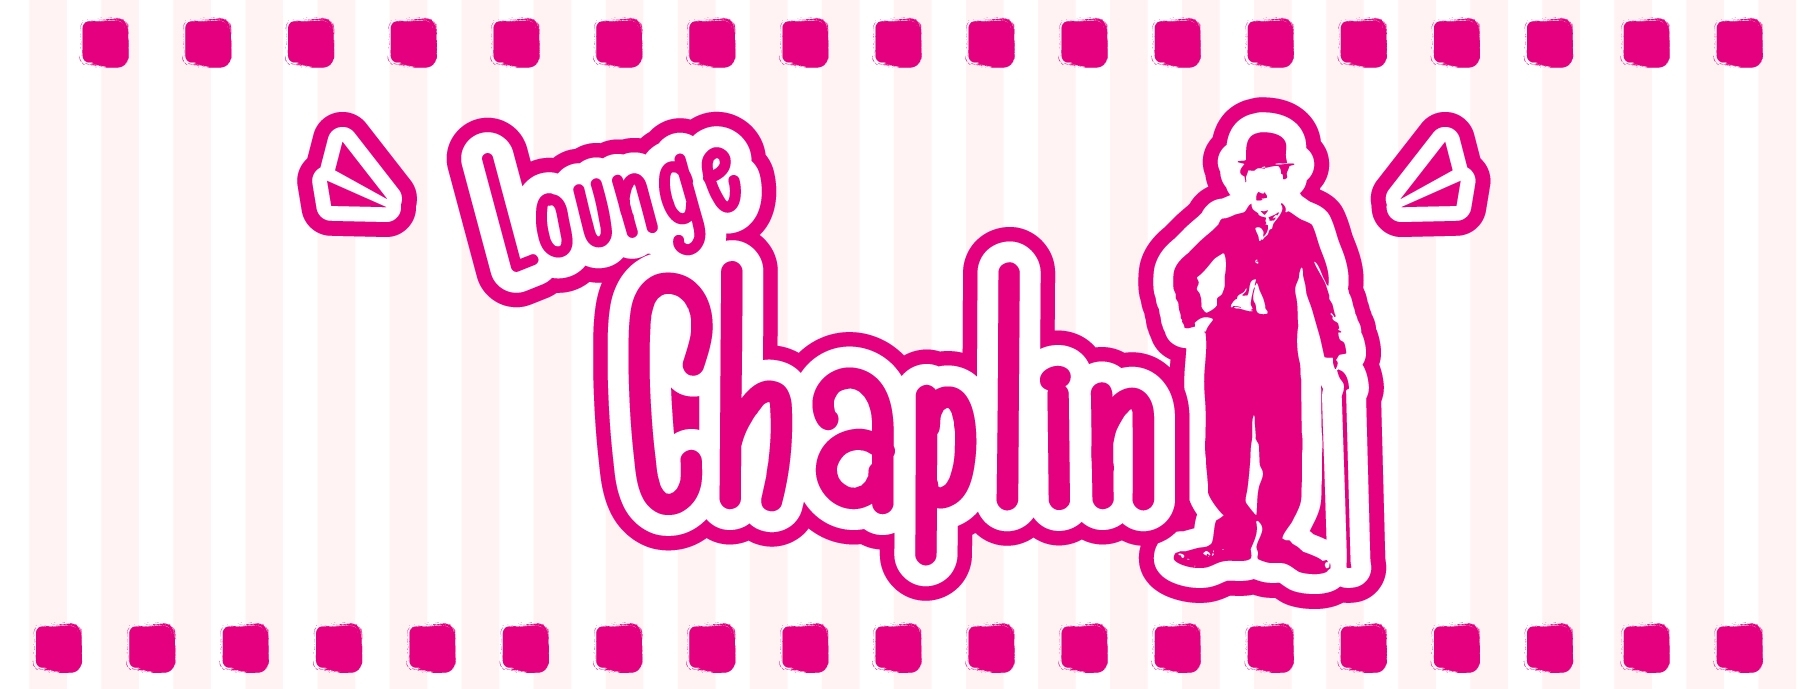 Lounge Chaplin　〜チャップリン 〜